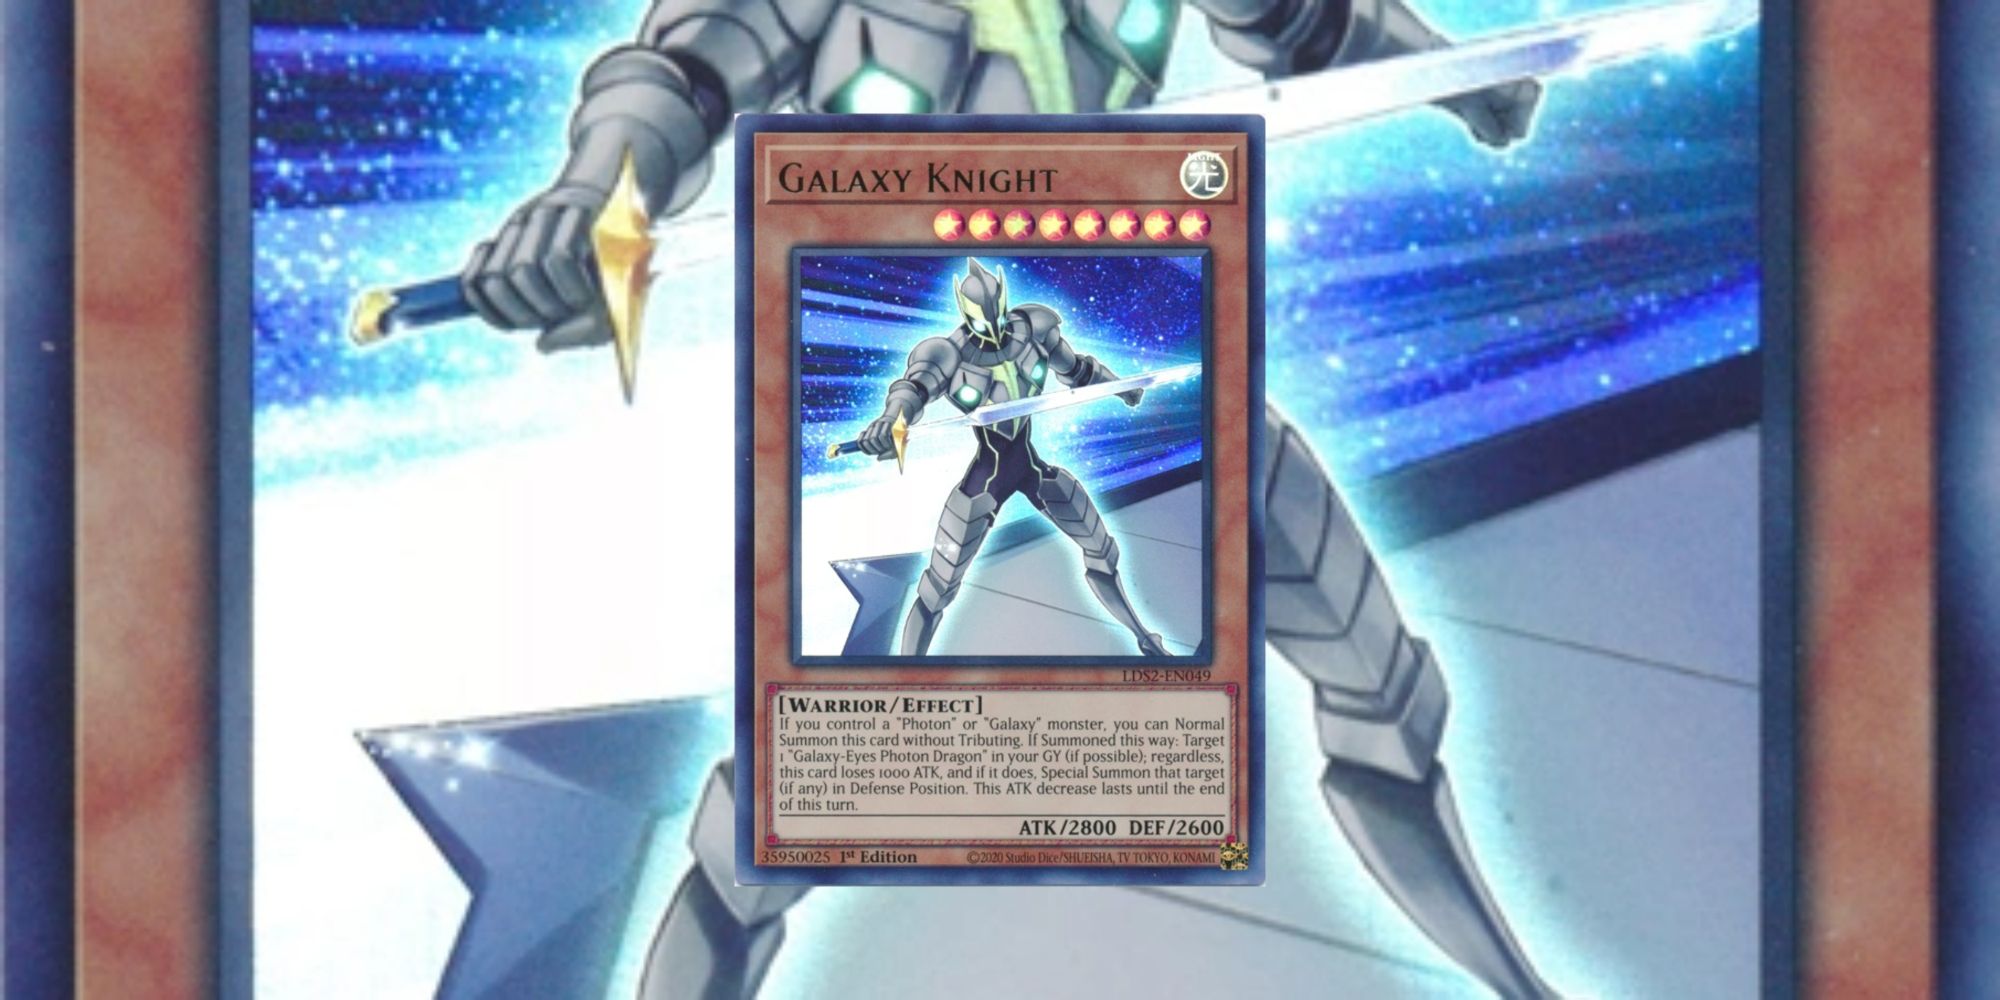 Galaxy Knight in Photon Deck